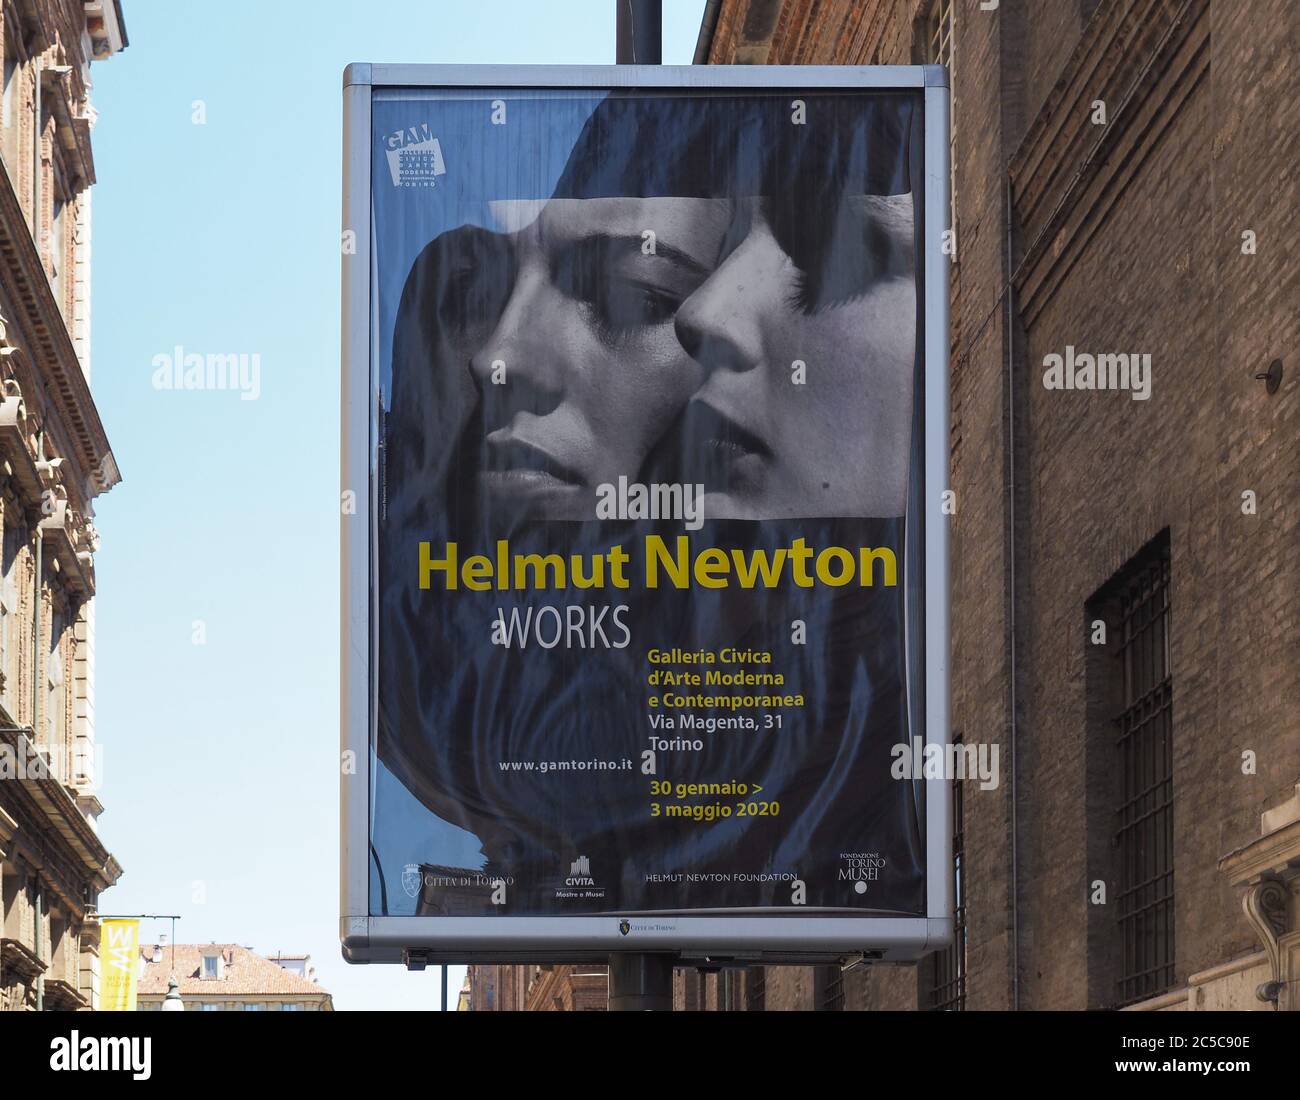 Helmut Newton exhibition Stock Photo - Alamy